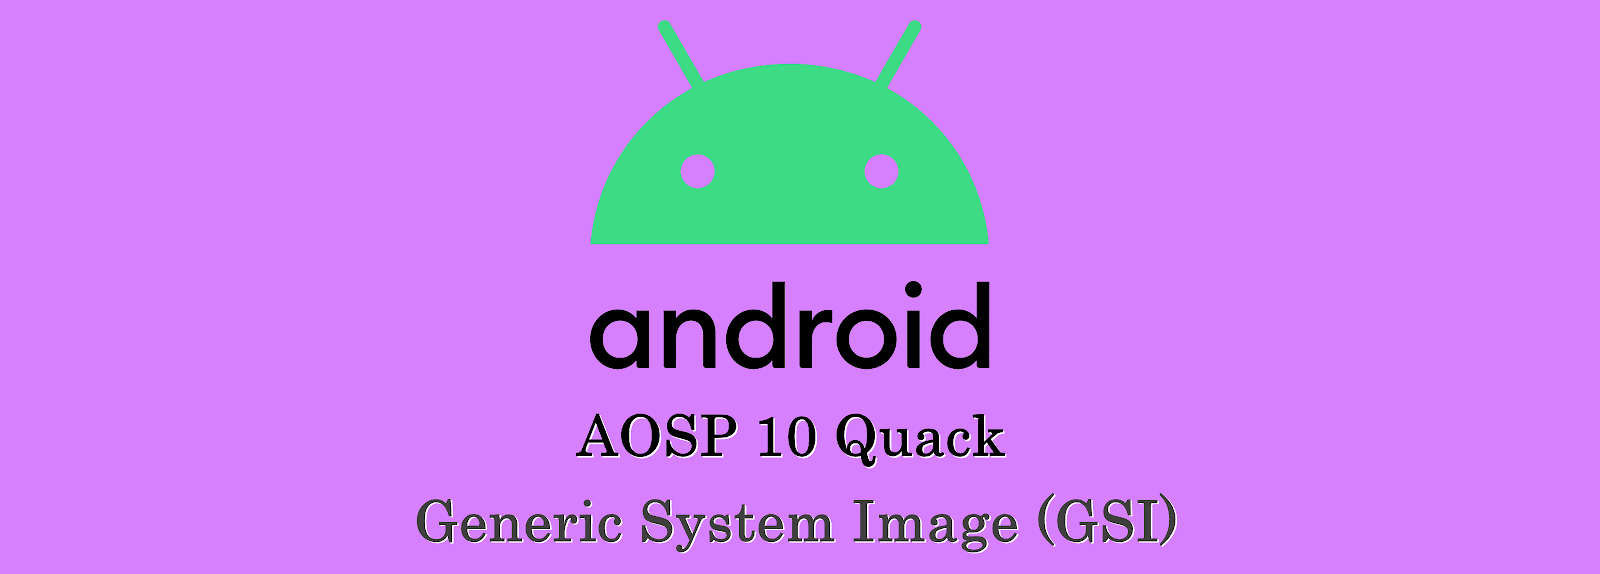 AOSP Android 10 Quack GSI banner illustration